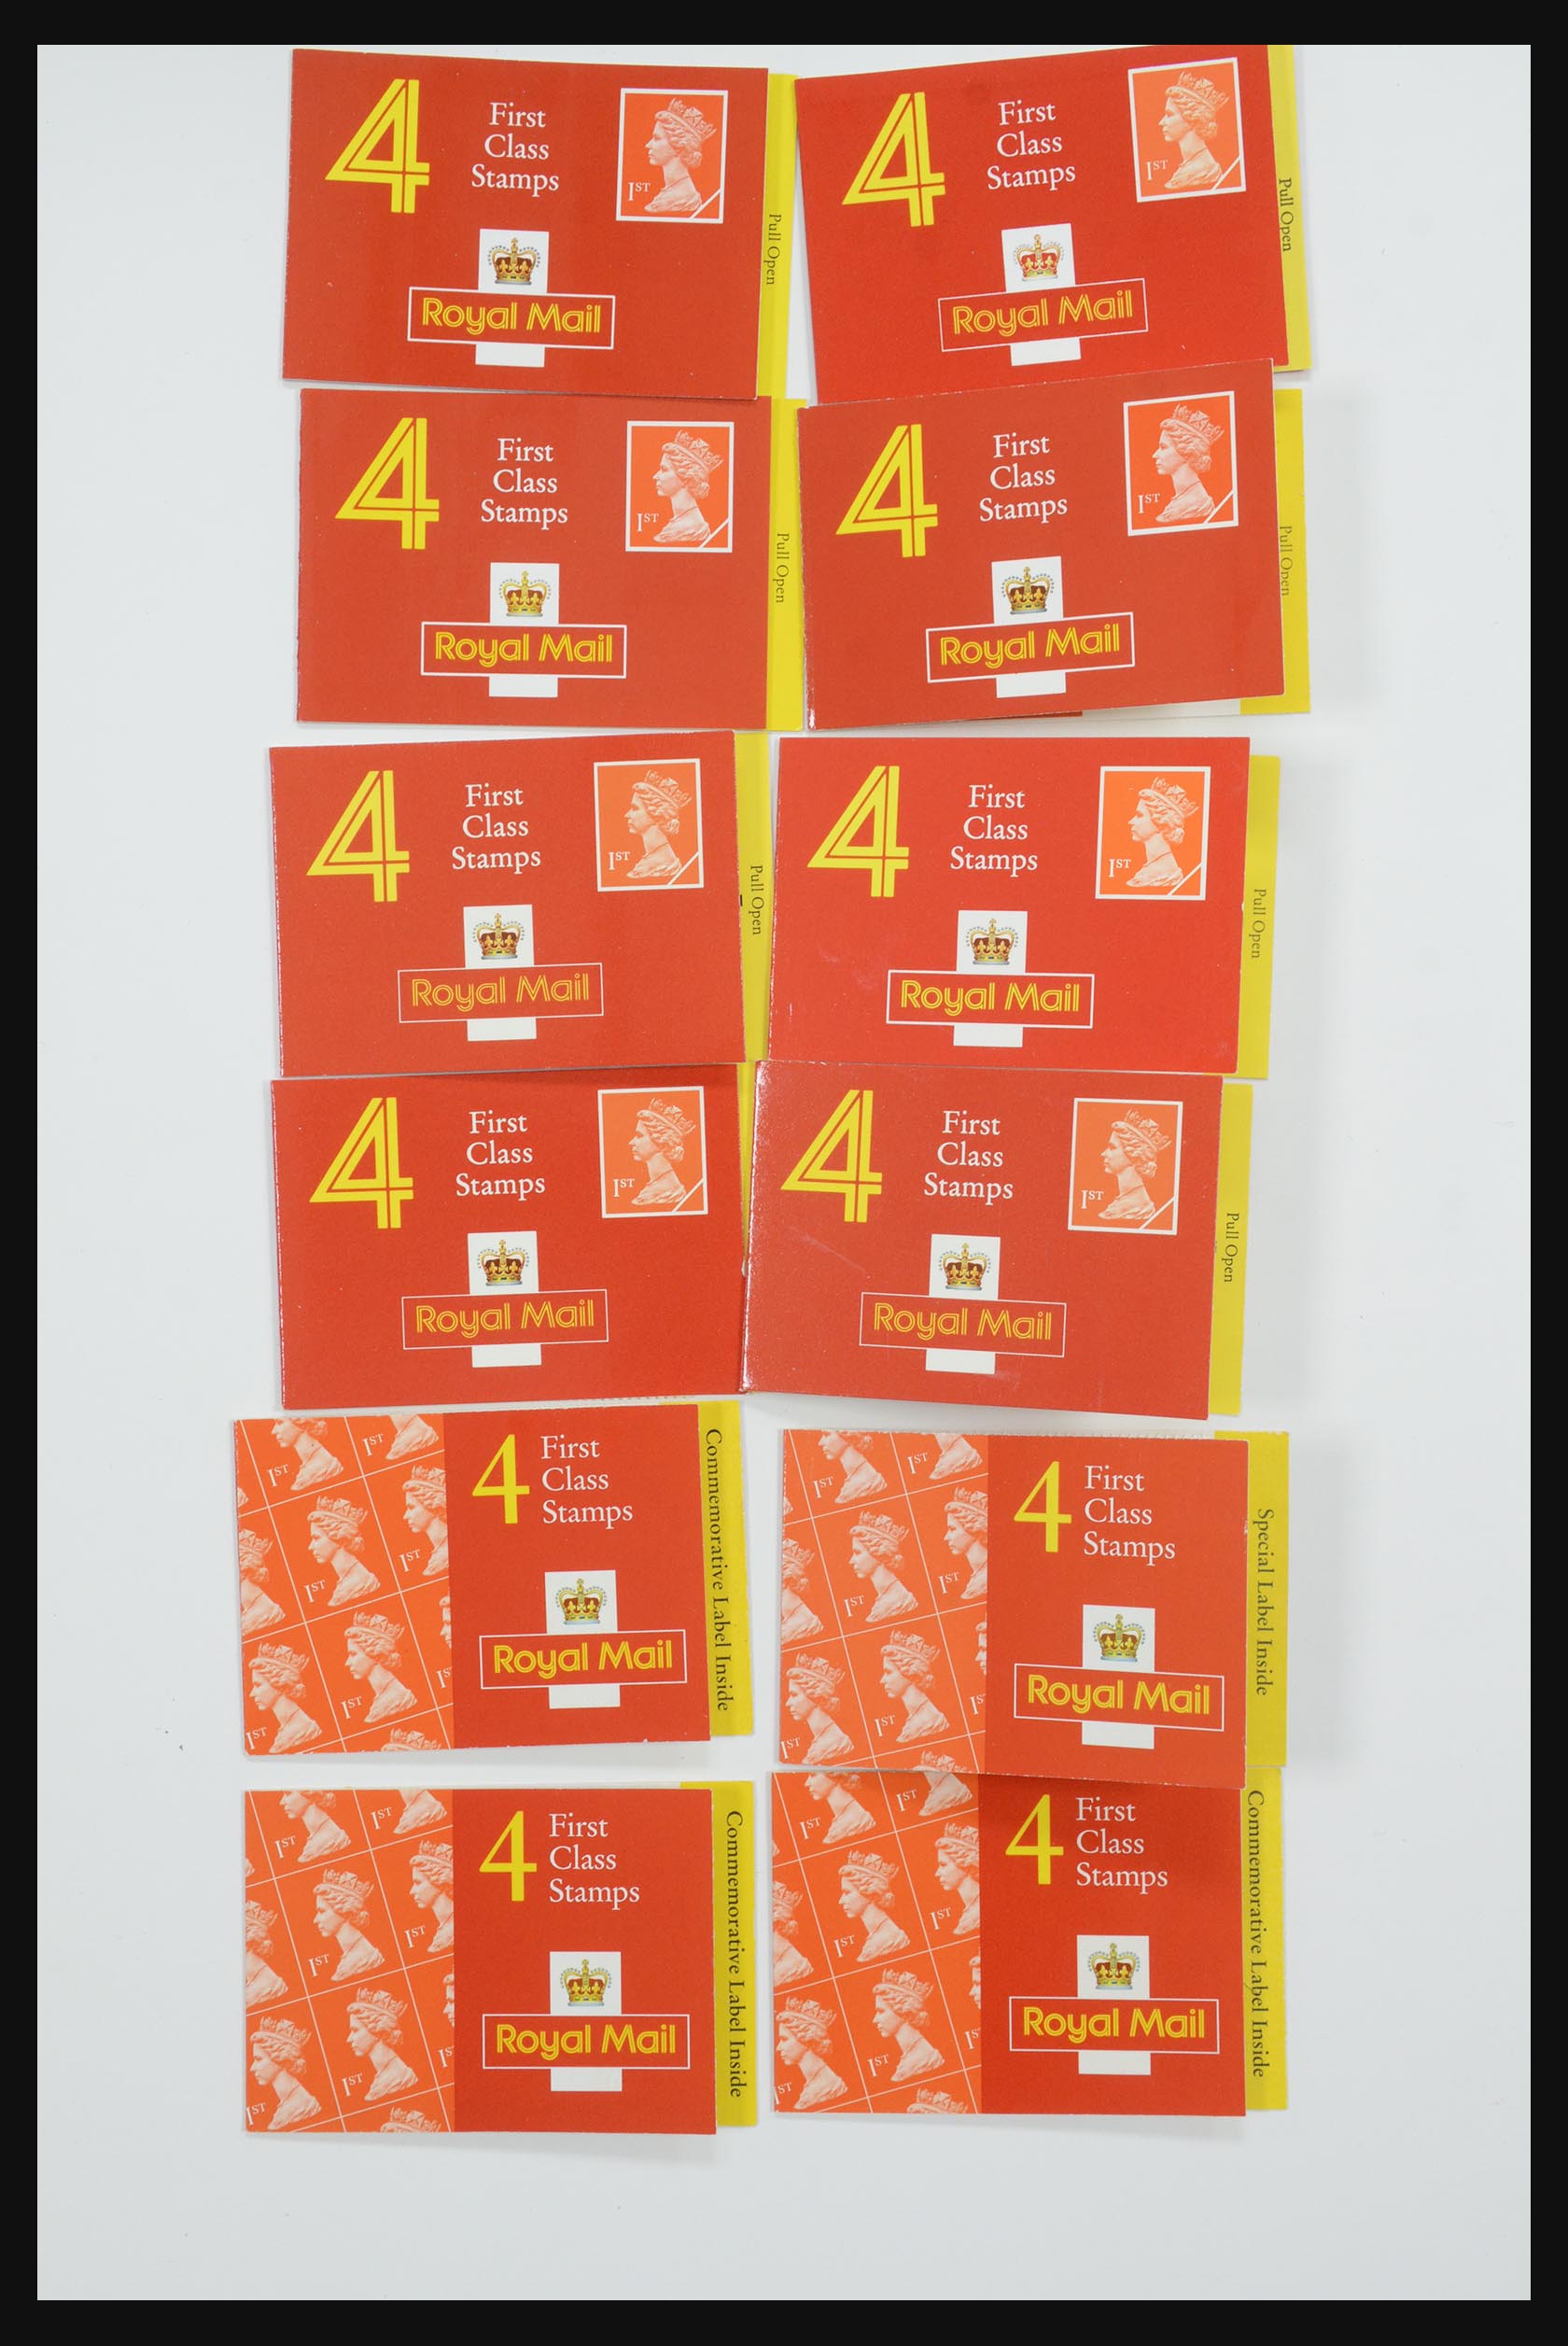 31961 045 - 31961 Great Britain stampbooklets 1971-1999.